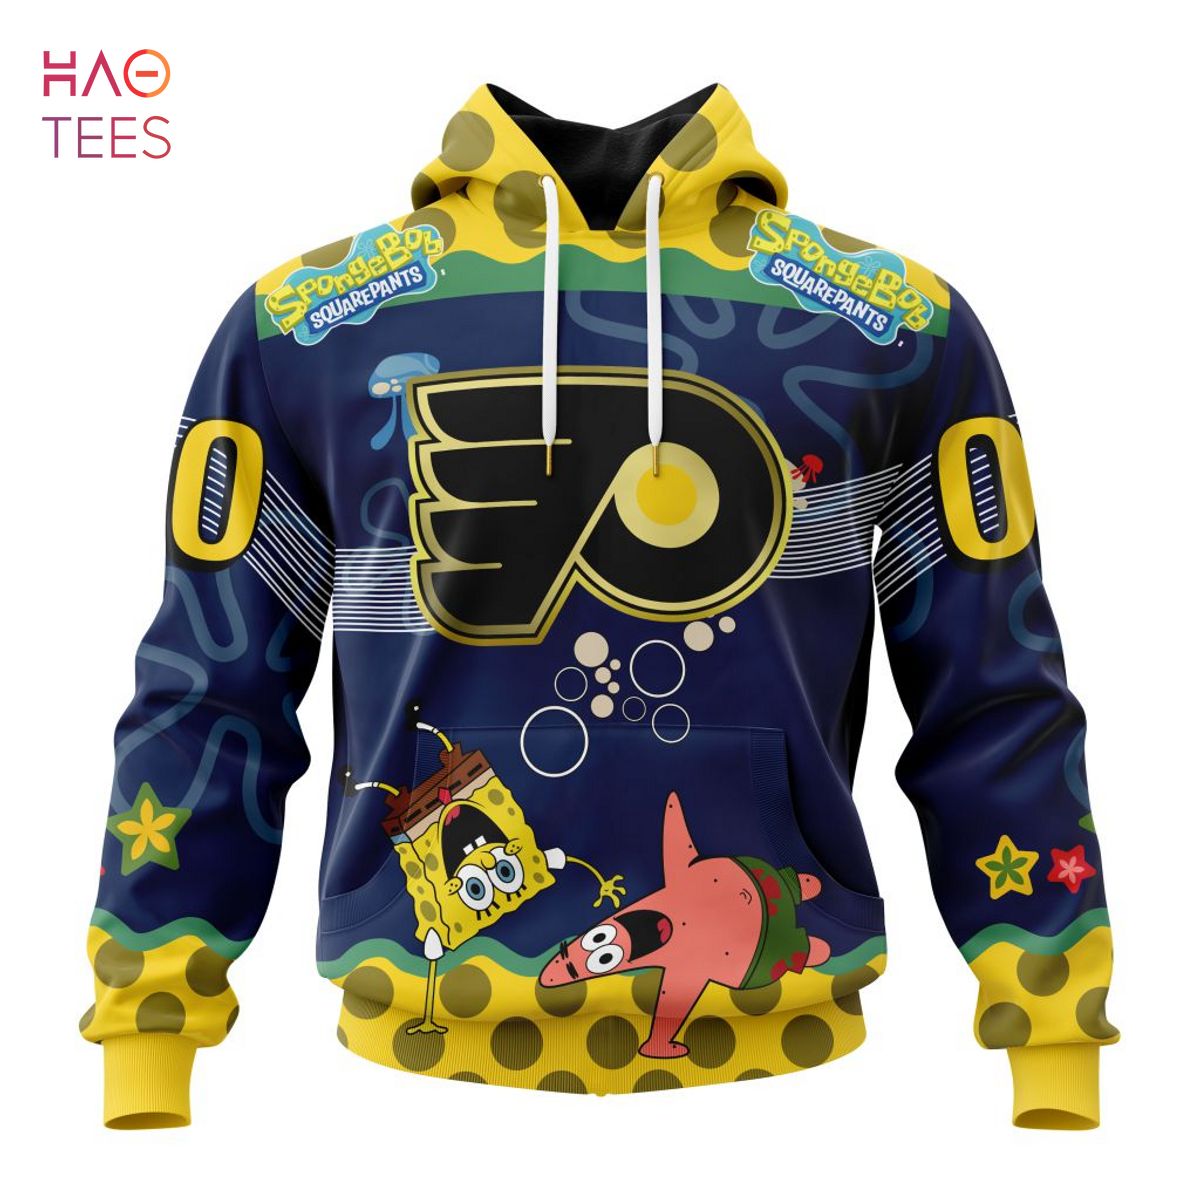 The best selling] Philadelphia Flyers Jersey With SpongeBob For